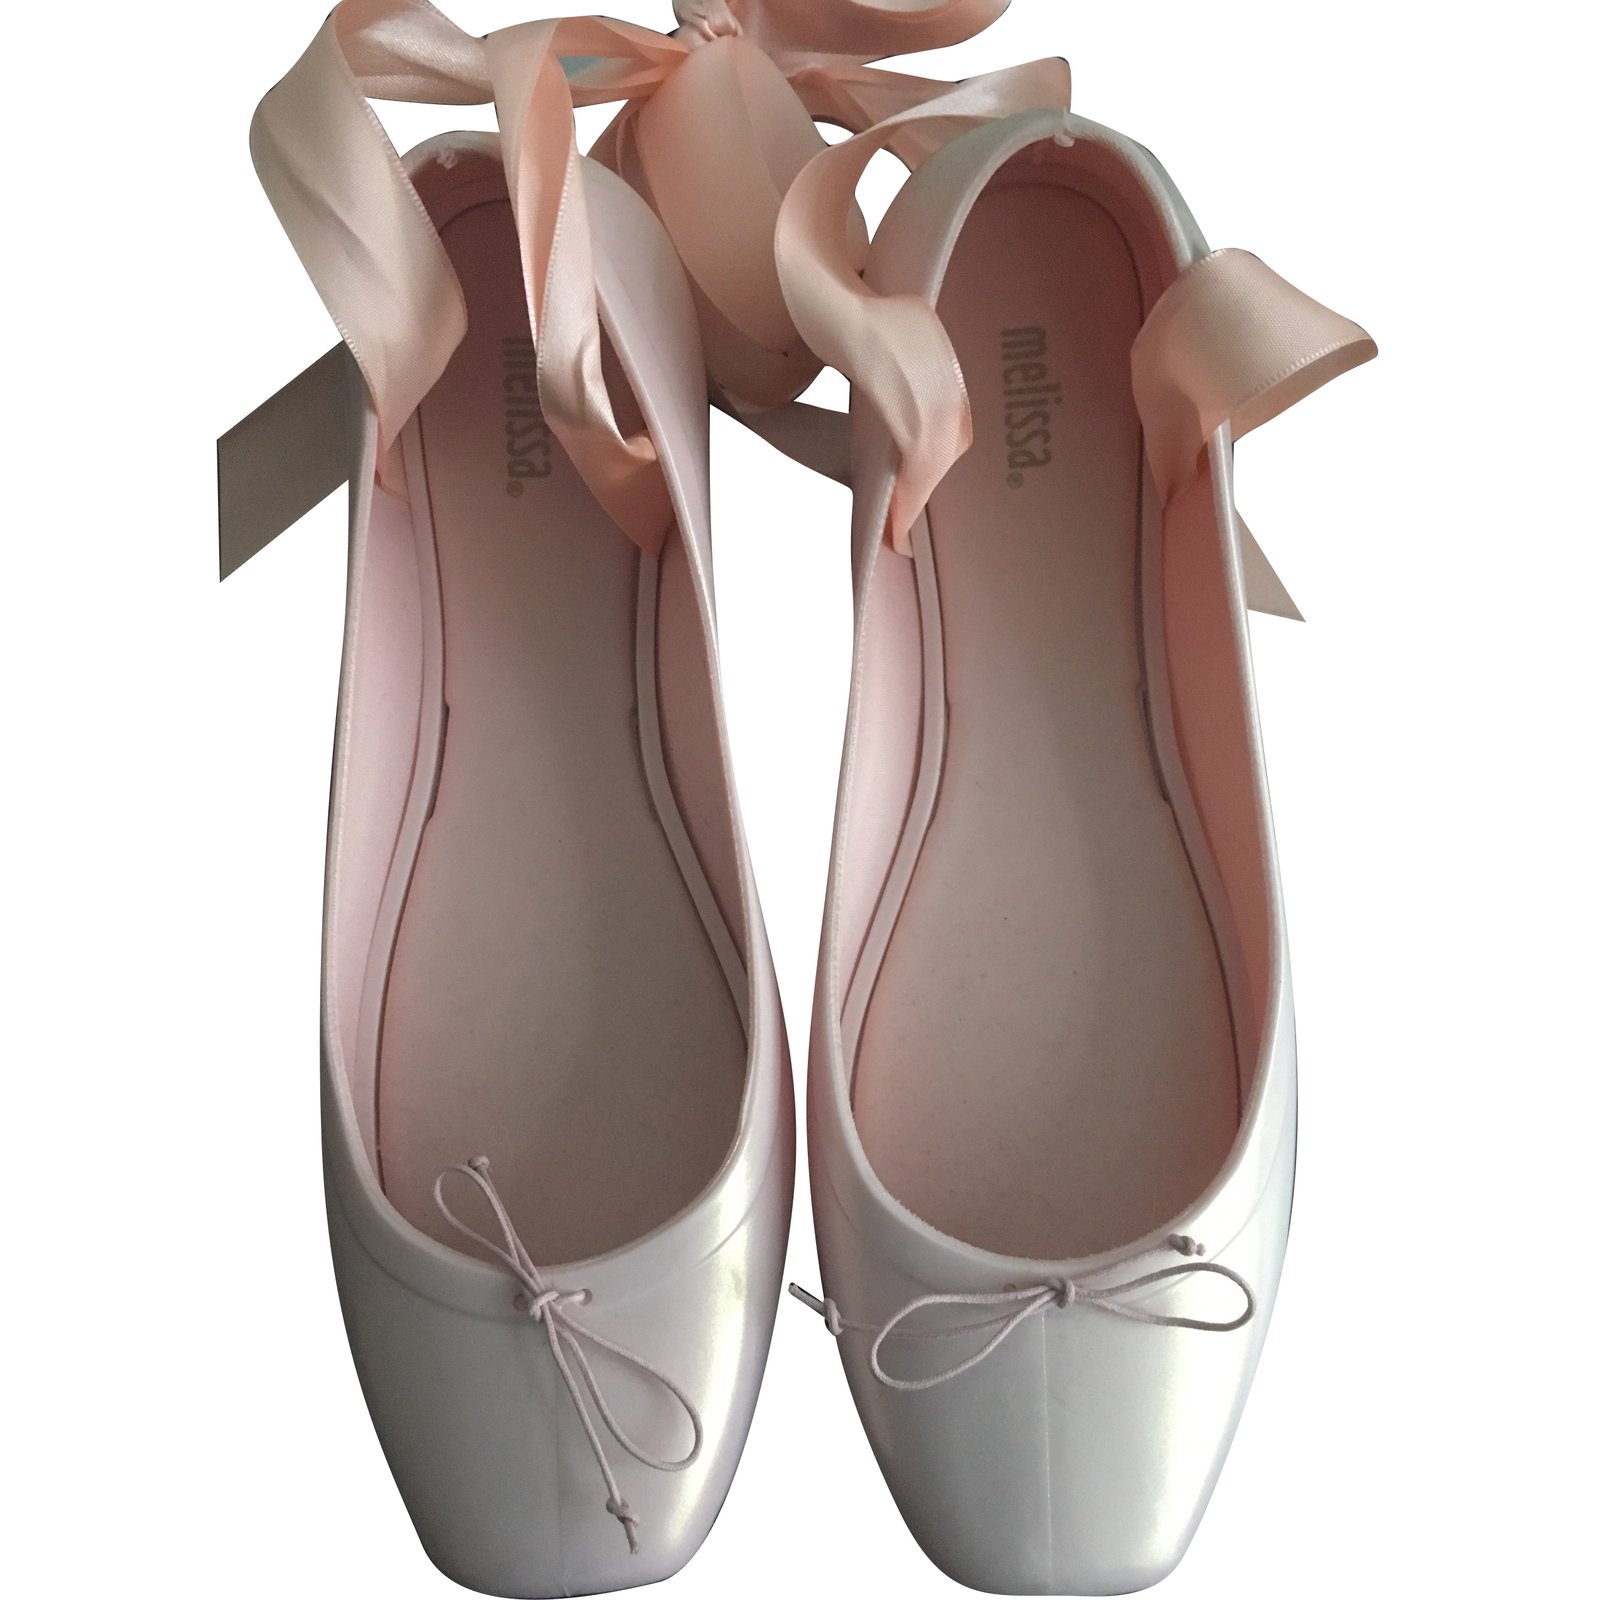 plastic ballerina shoes